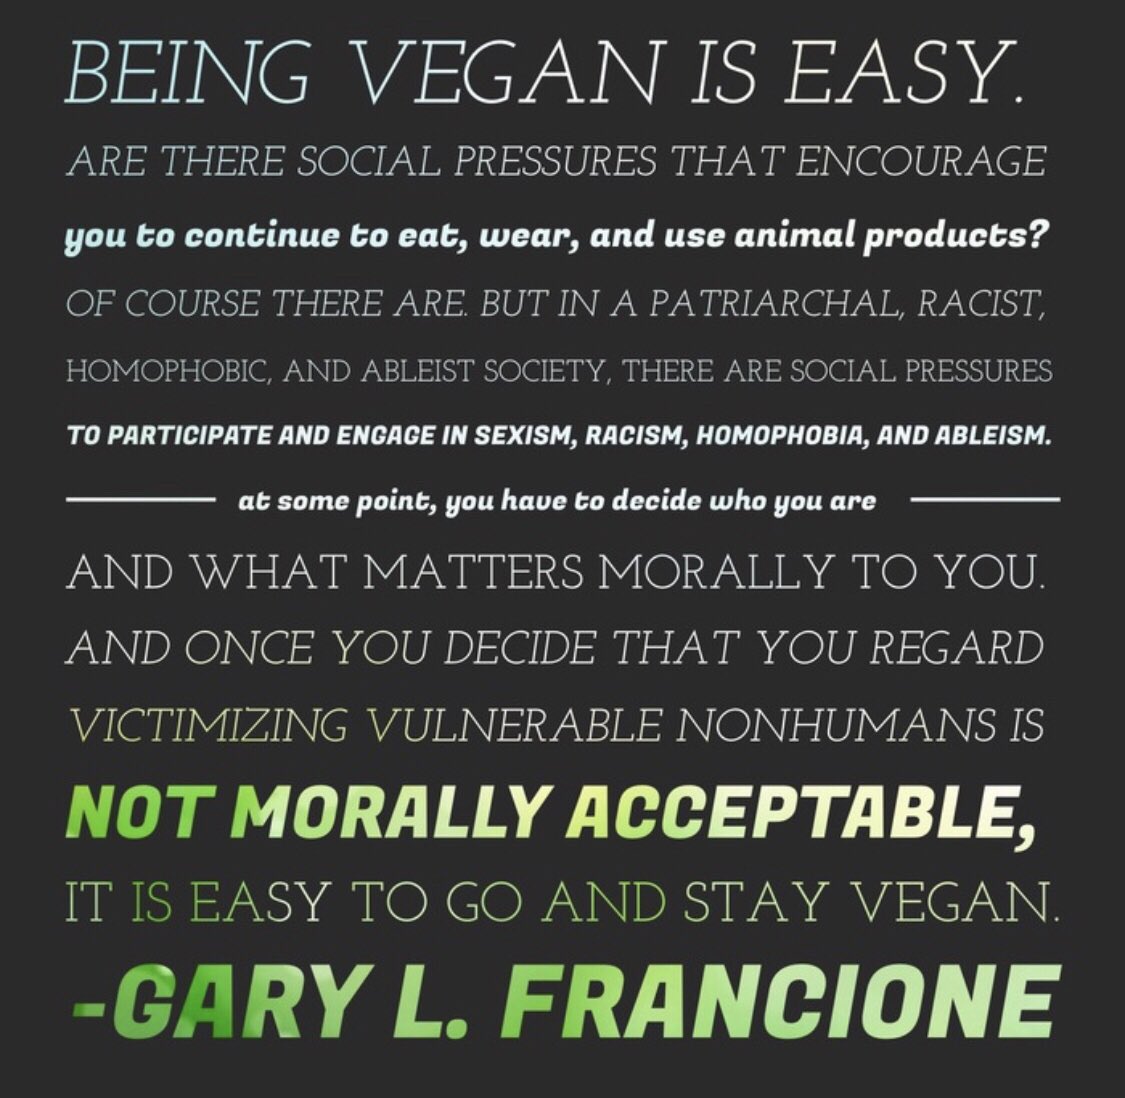 Yep!  Well said!!!  Go Vegan for the greater good for all. #MeatIsGood #vegan